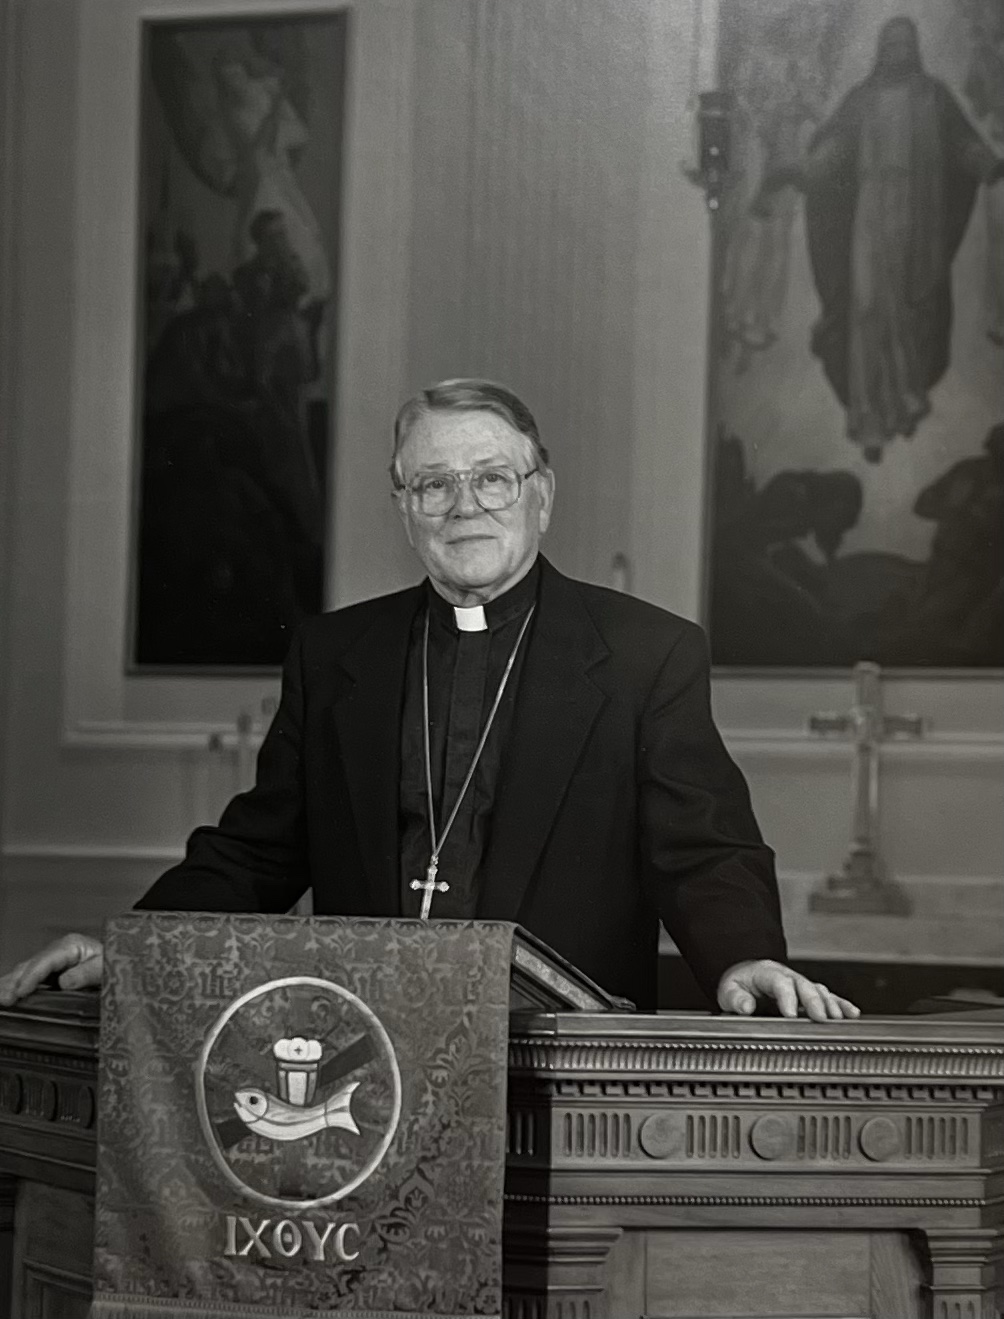 The Rev. Richard Ehrhart